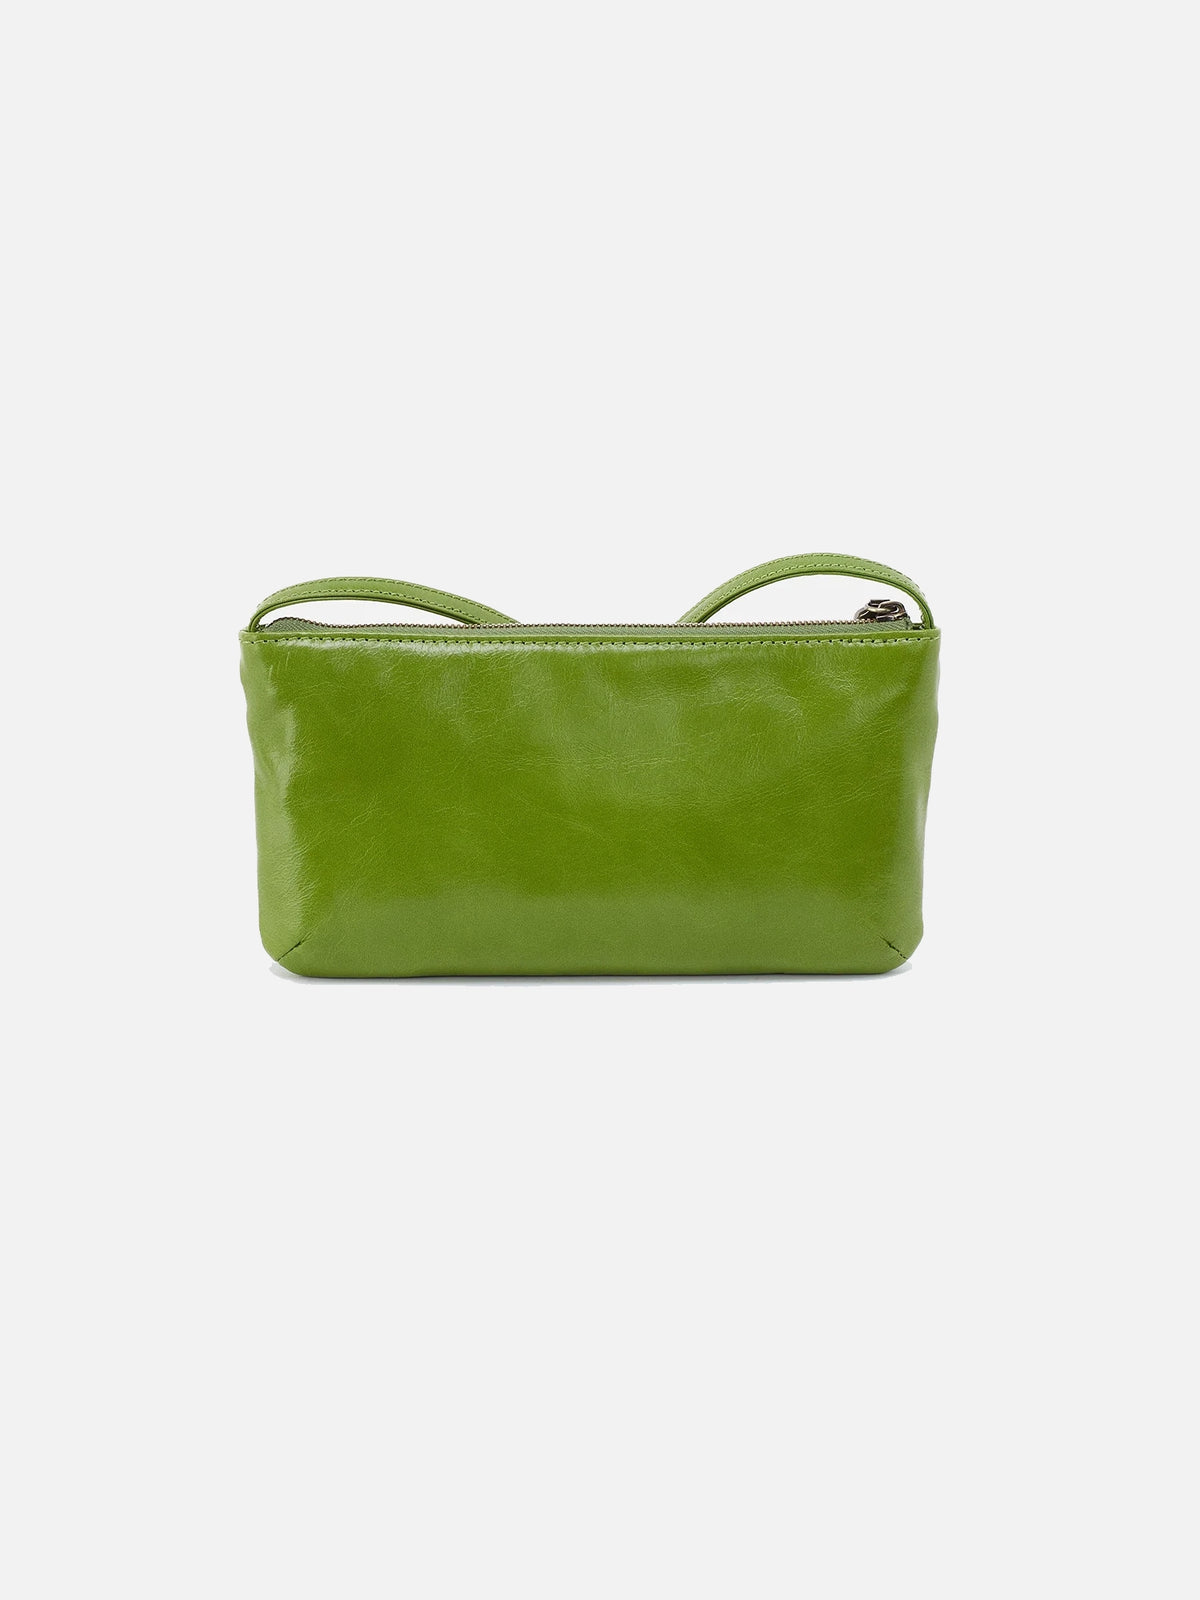 hobo cara crossbody bag in garden green polished leather